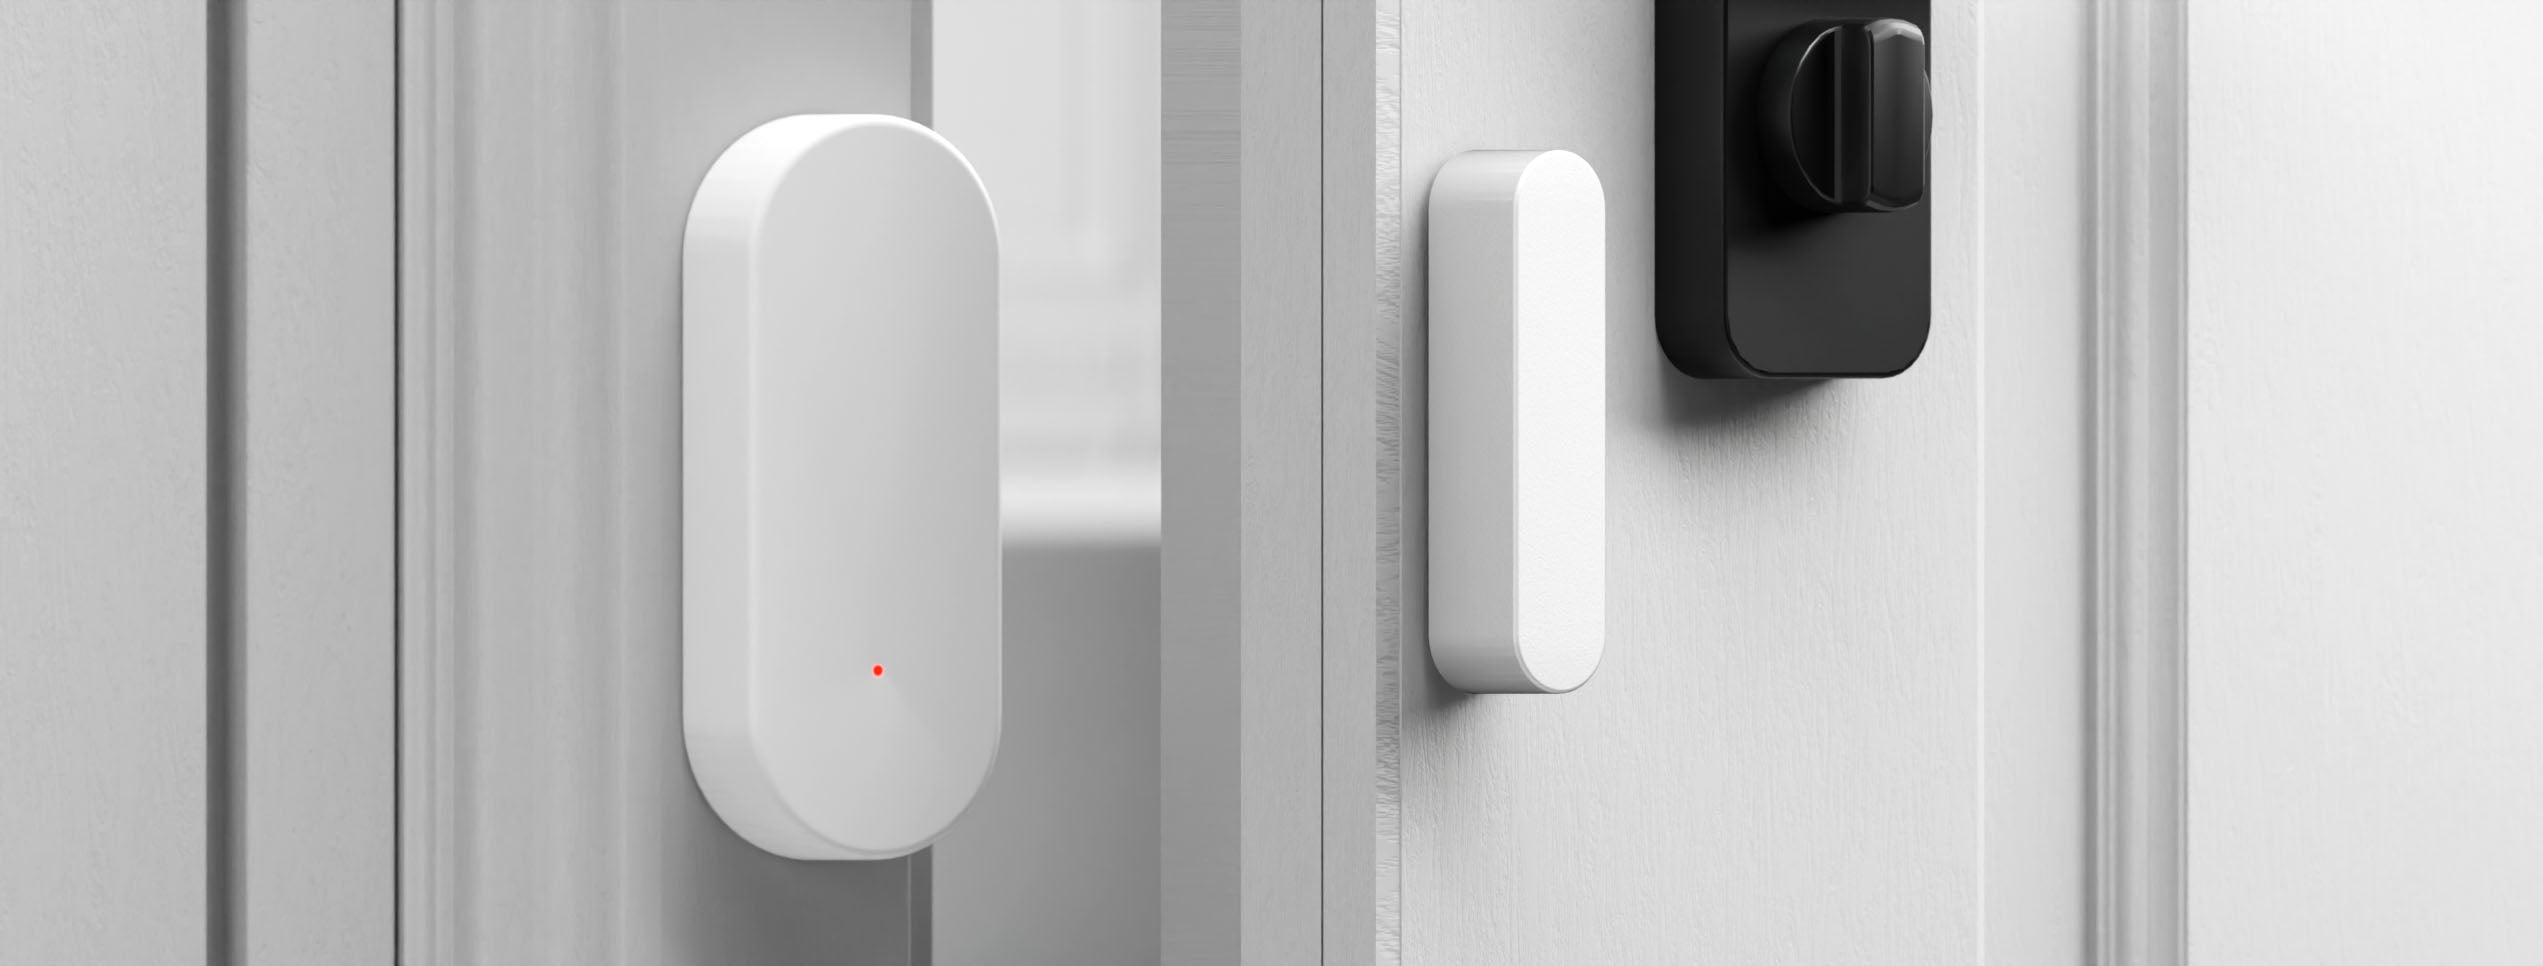 Staniot DS100 sensor positioned on open white door next to smart keypad knob